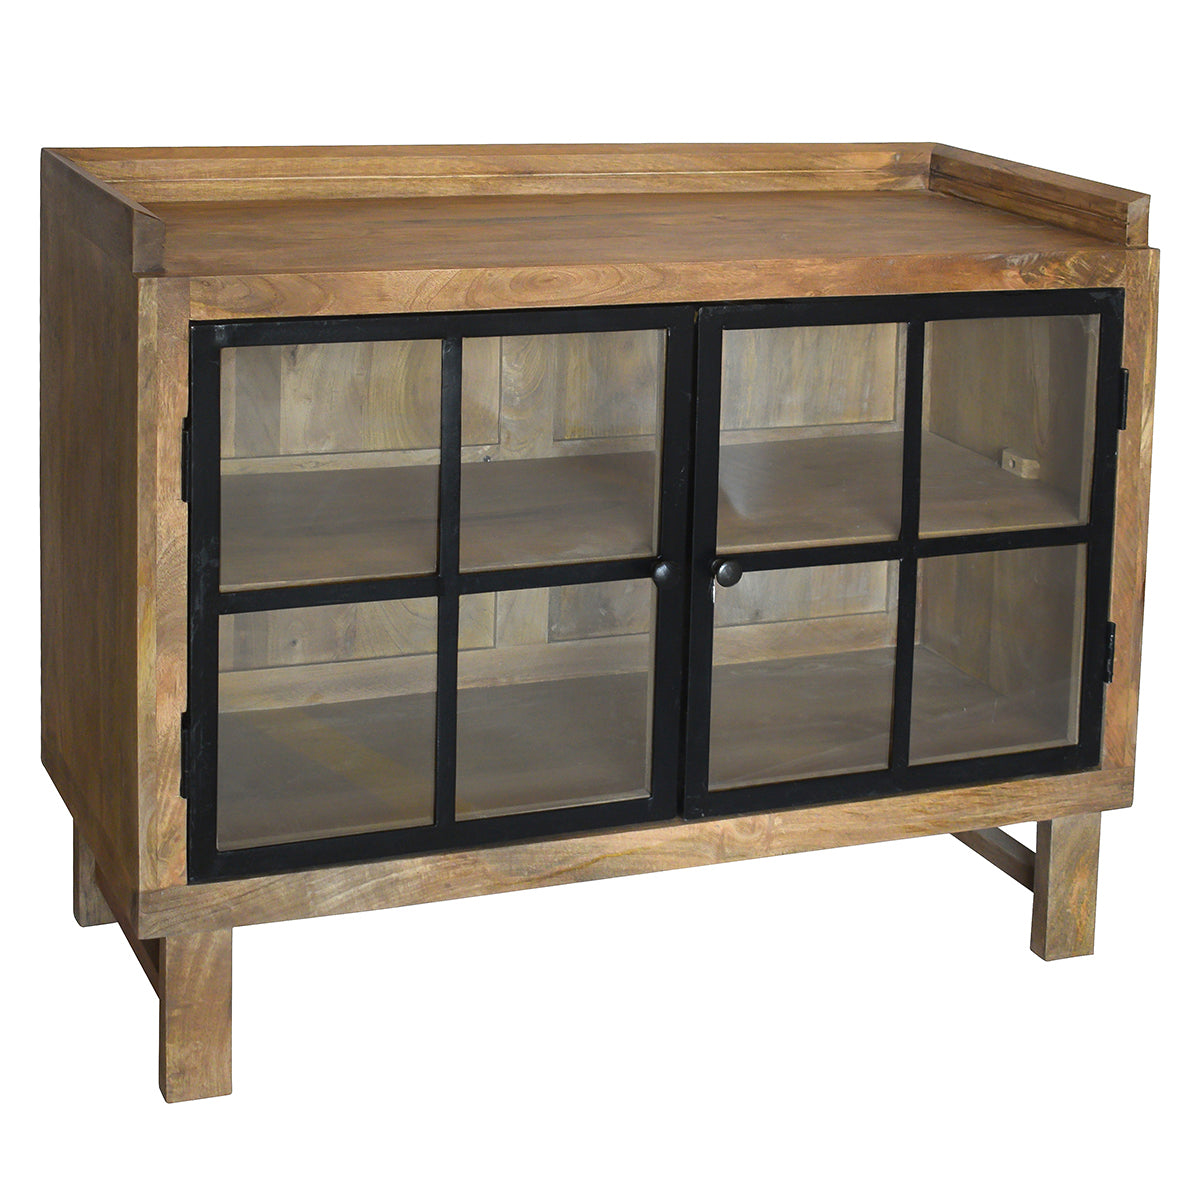 Atticus Iron Wood Cabinet Light Bleach Wrightwood Furniture